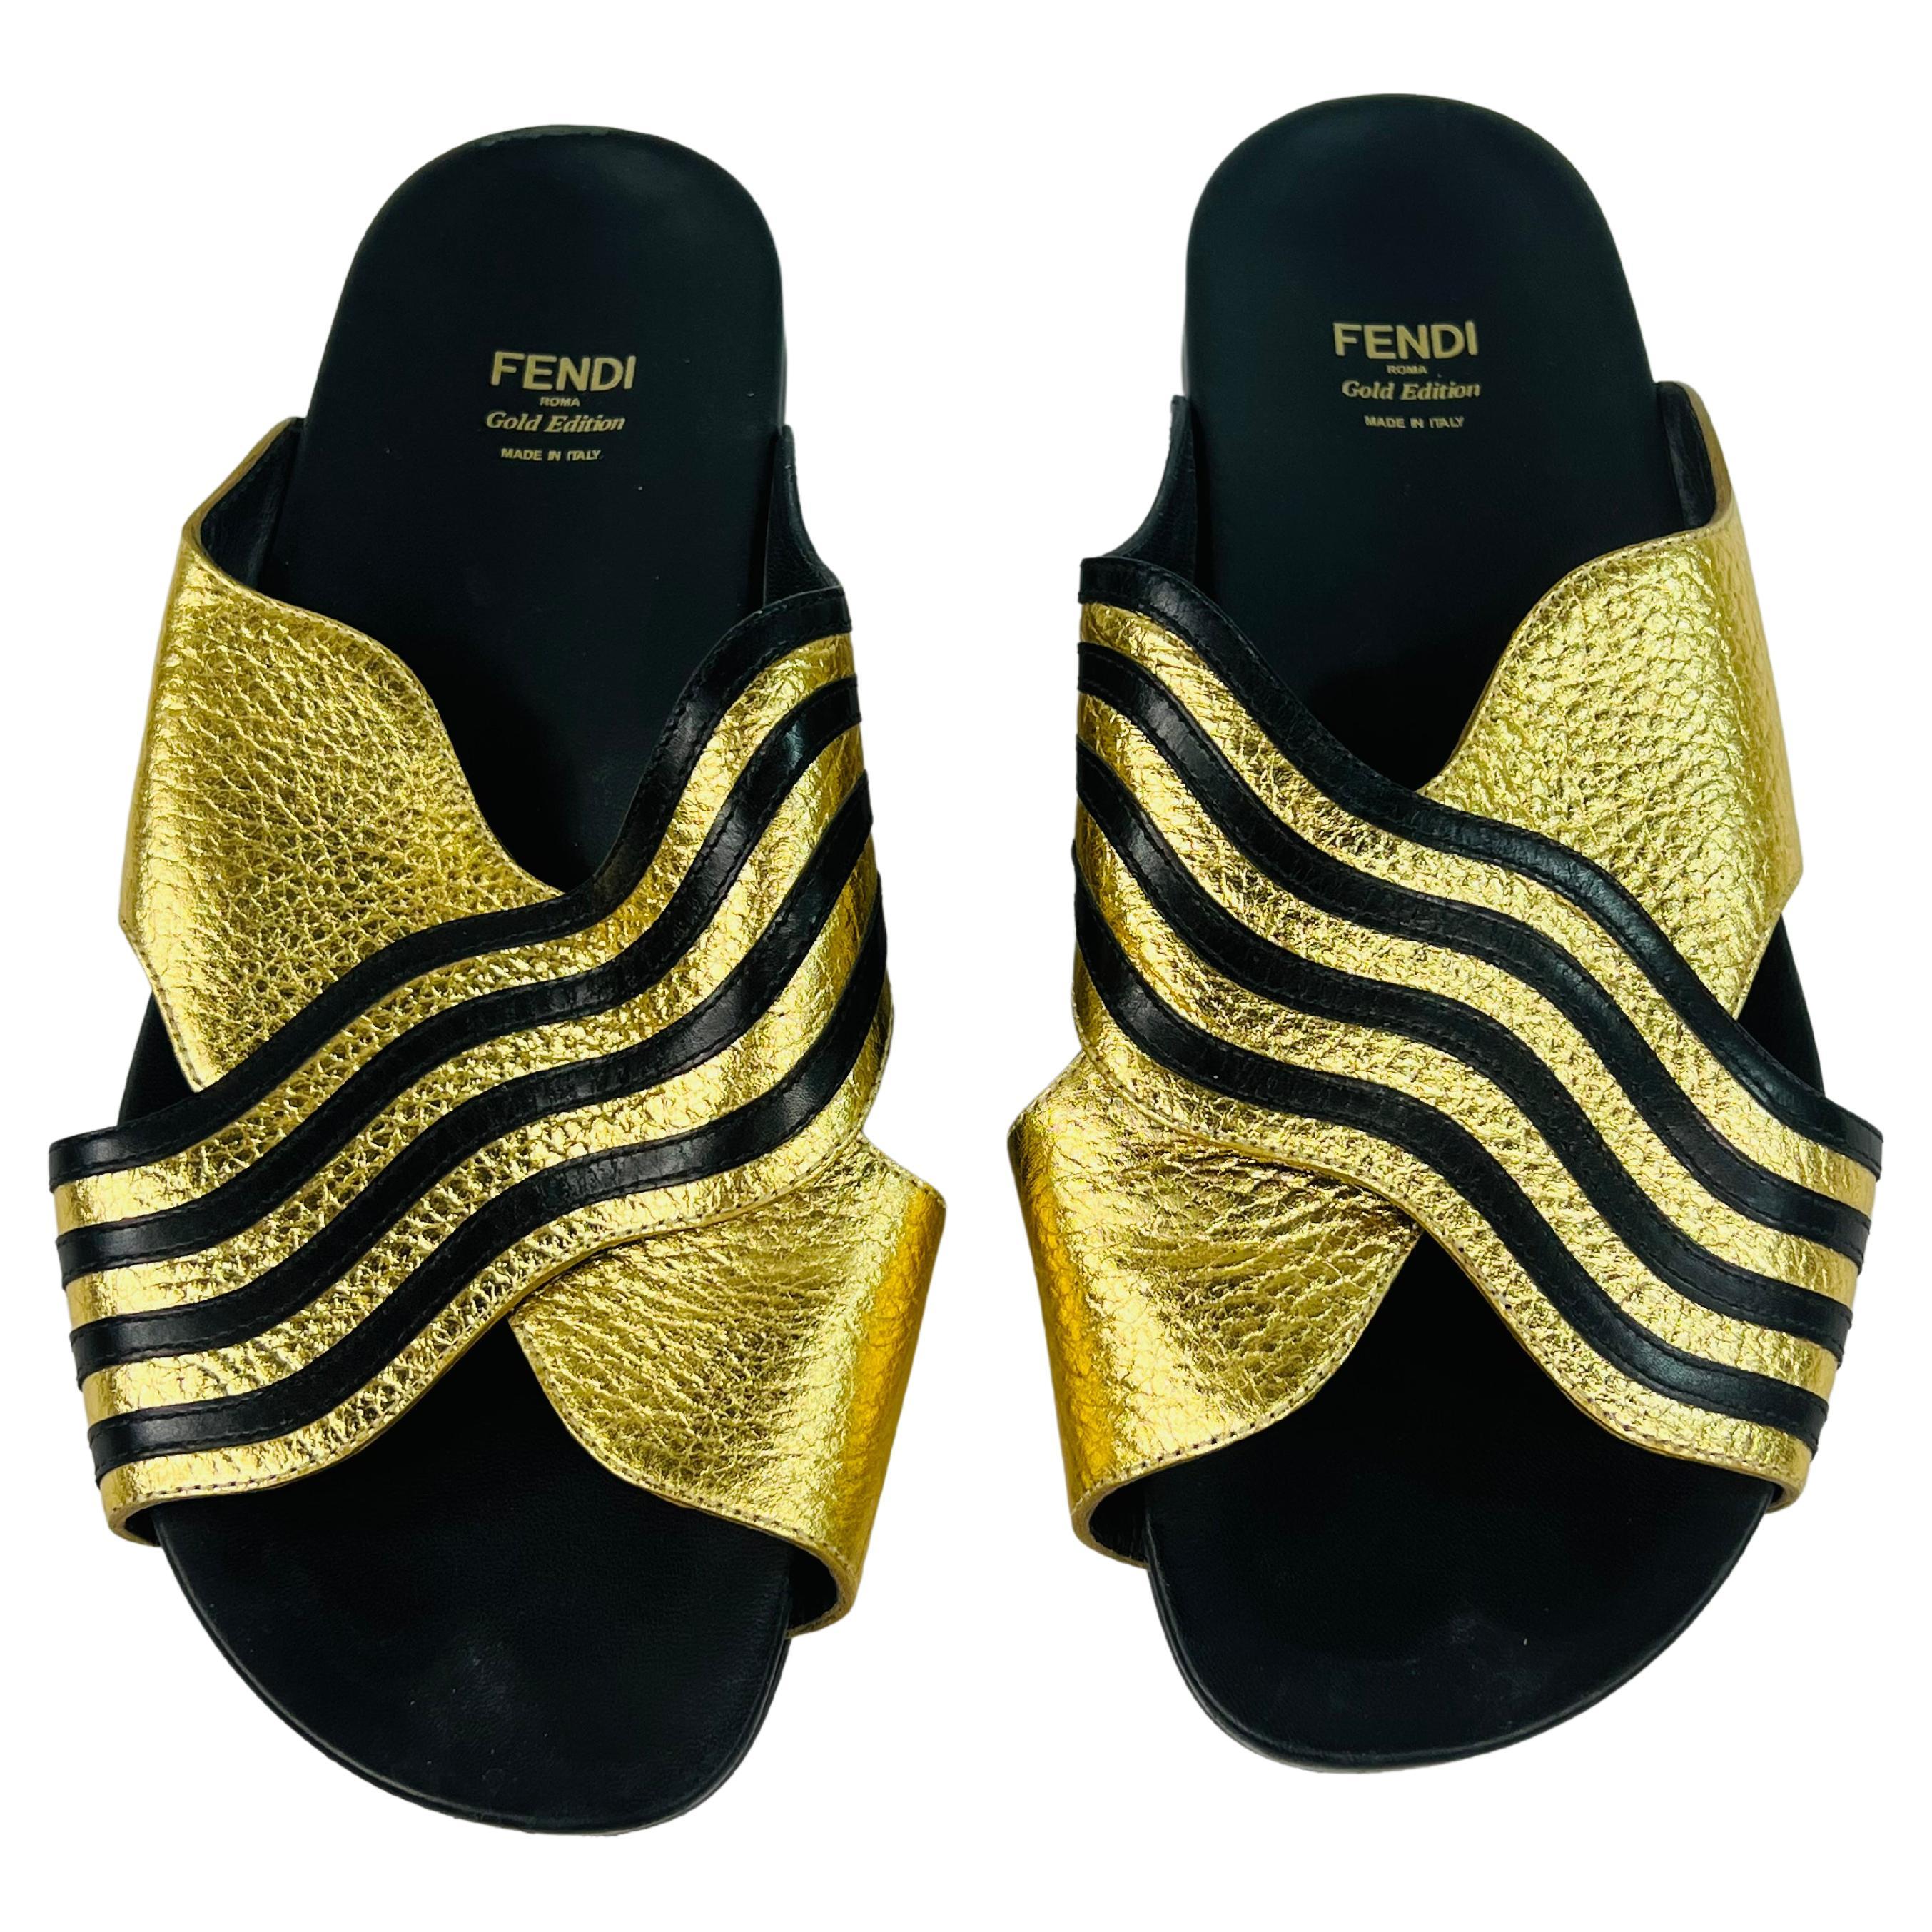 Fendi Gold Edition Leather Flat Sandals, Size 38.5